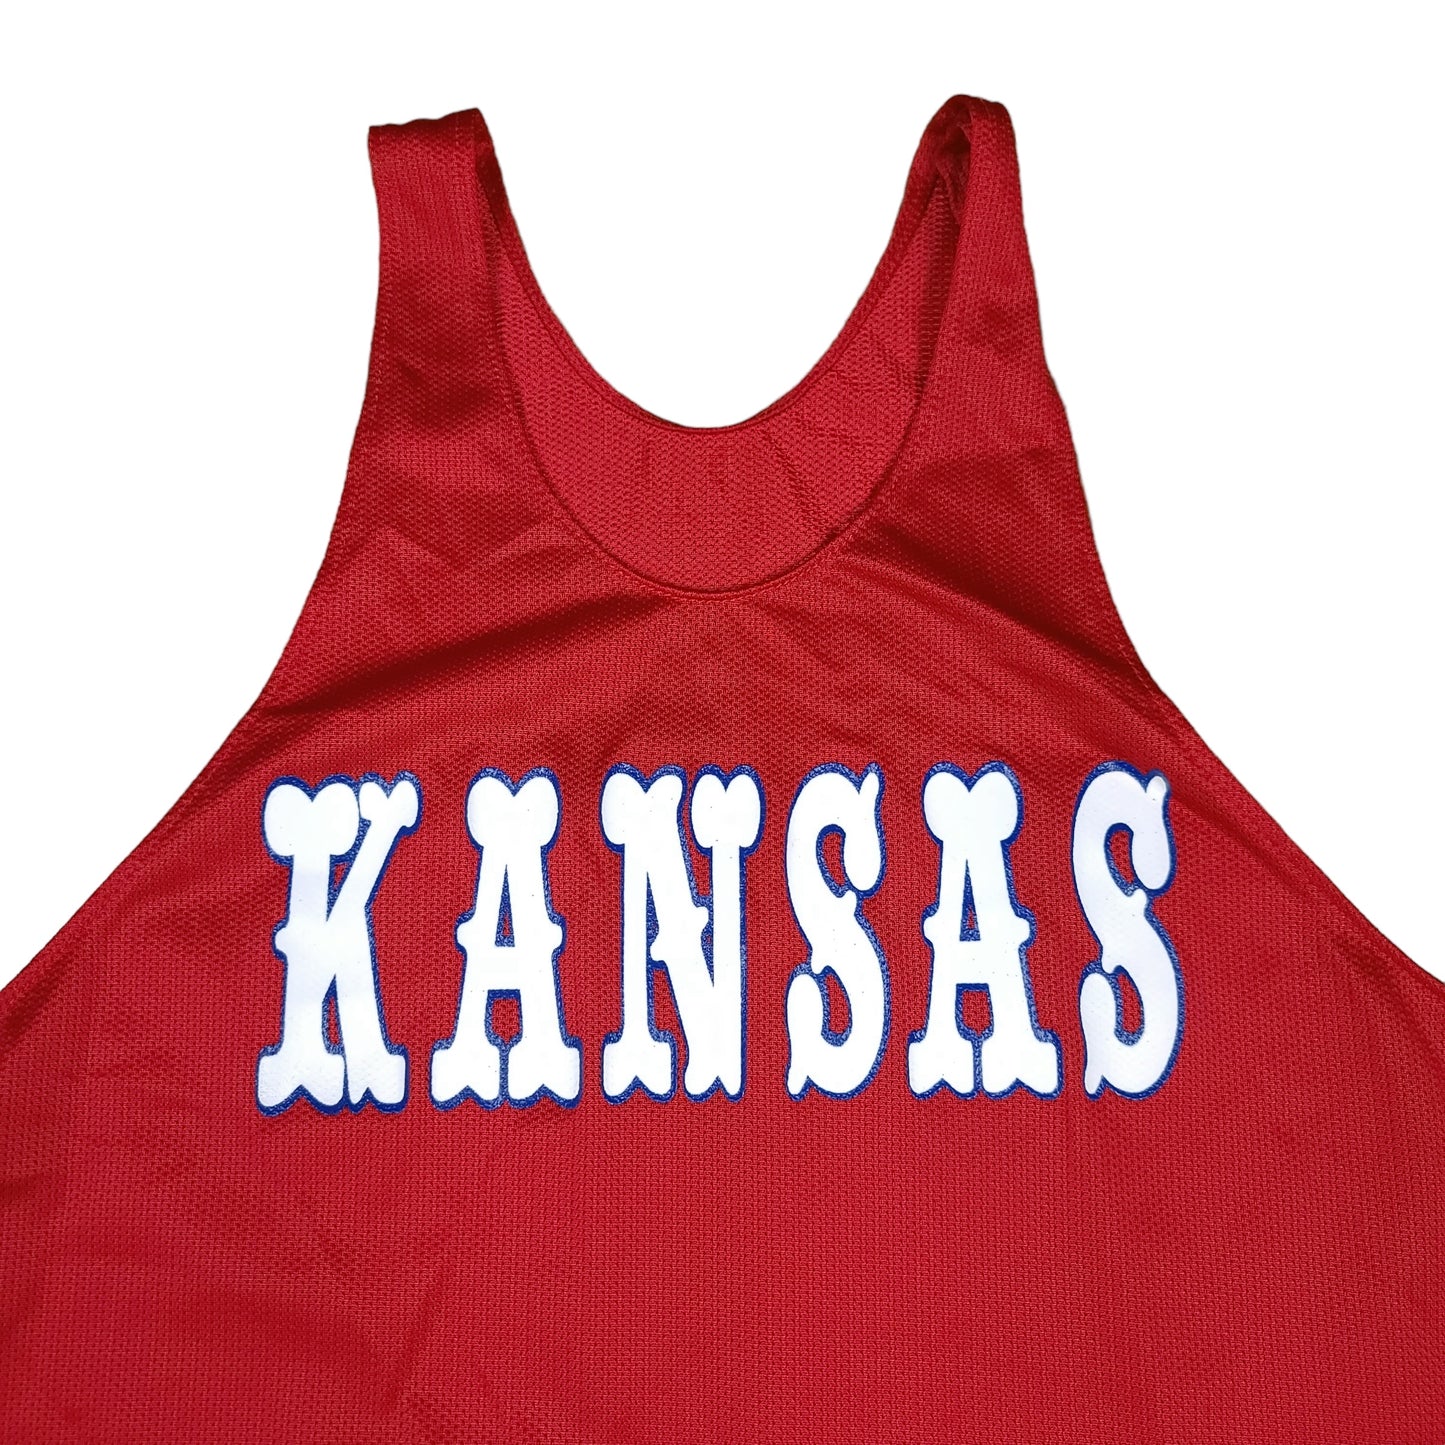 Vintage University of Kansas Jayhawks DeLong Mesh Tank Top